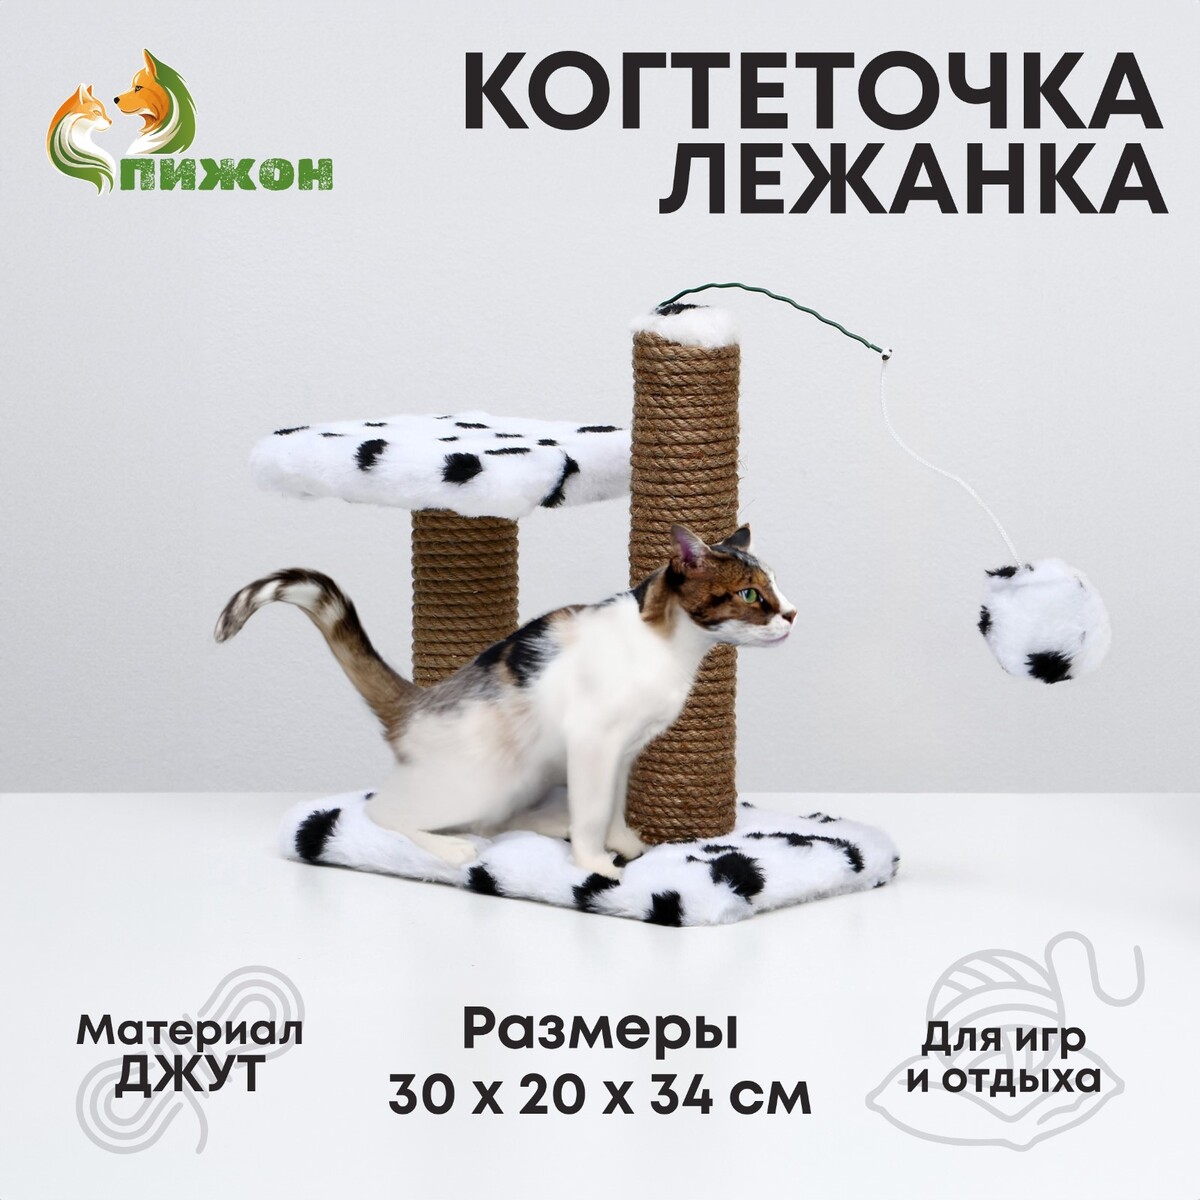 Когтеточка для котят двойная, 30 х 20 х 34 см, джут, далматинец когтеточка столбик